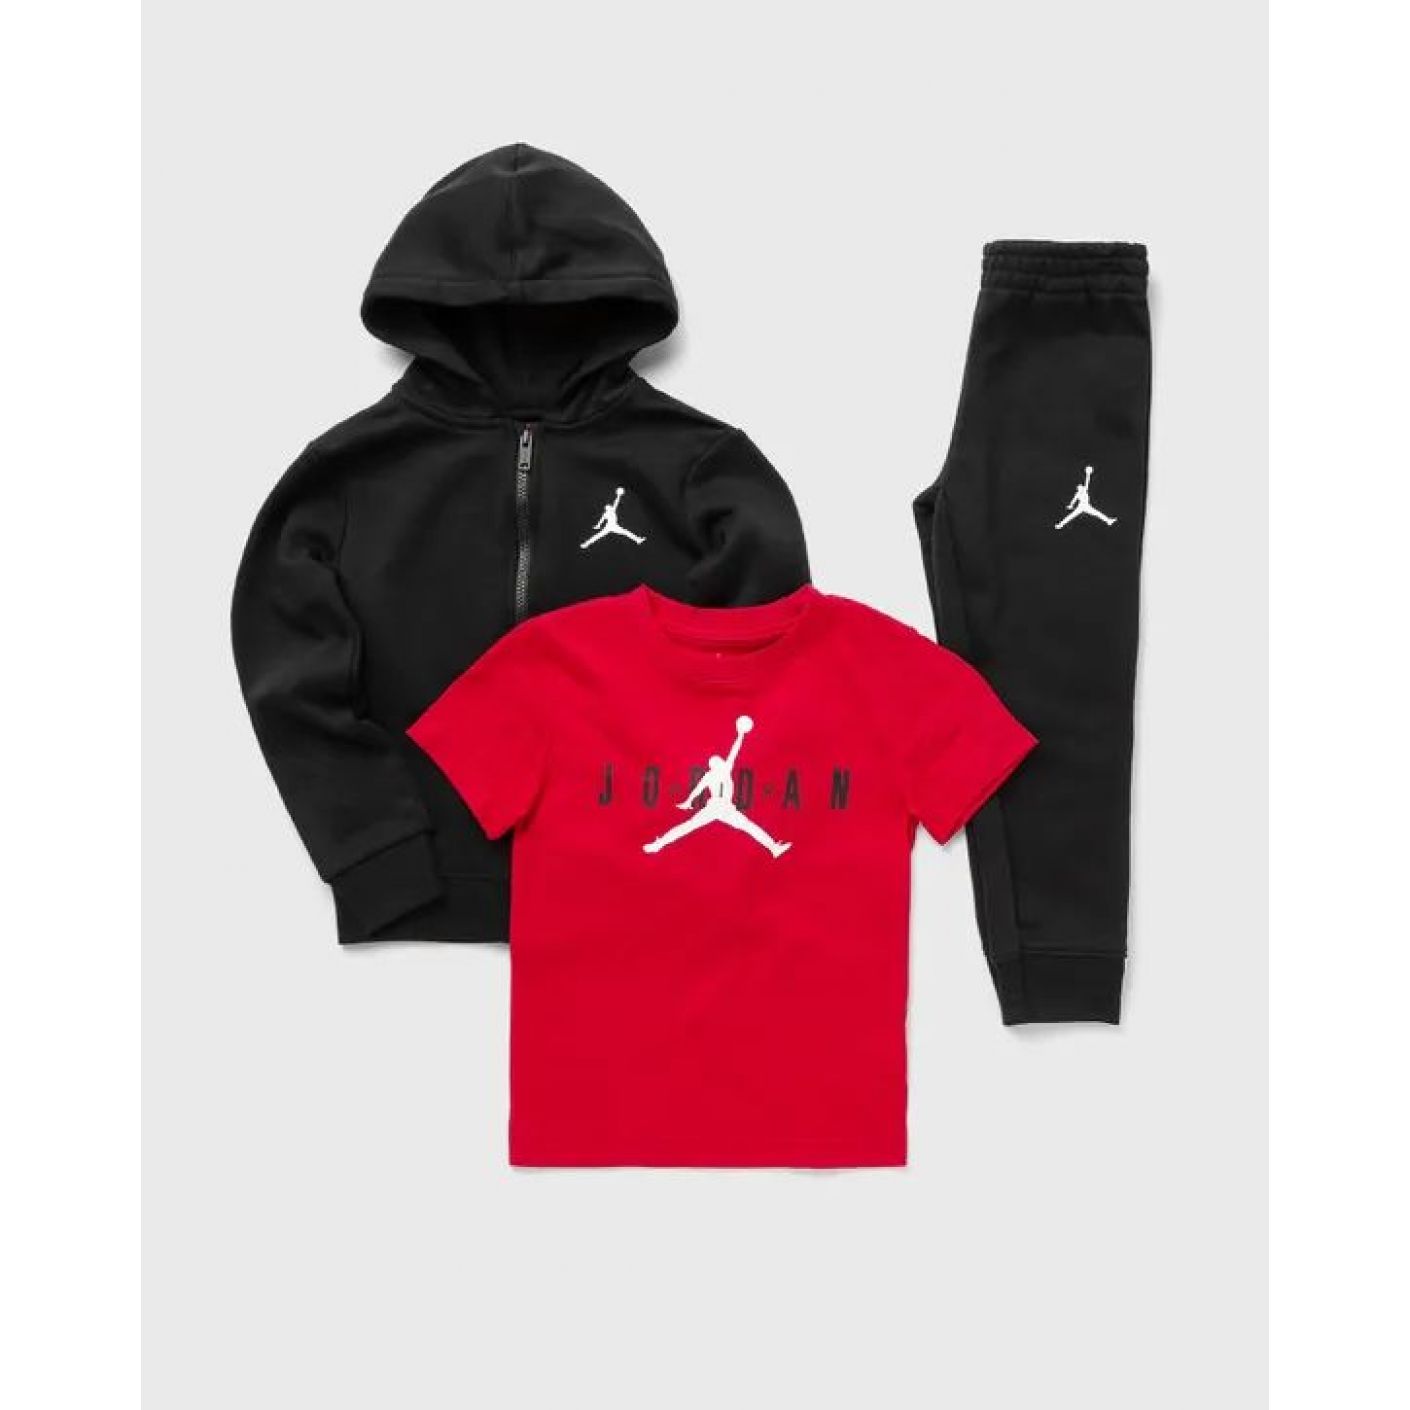 Nike Jordan Essential 3PC Black/Red Tracksuit Set for Children